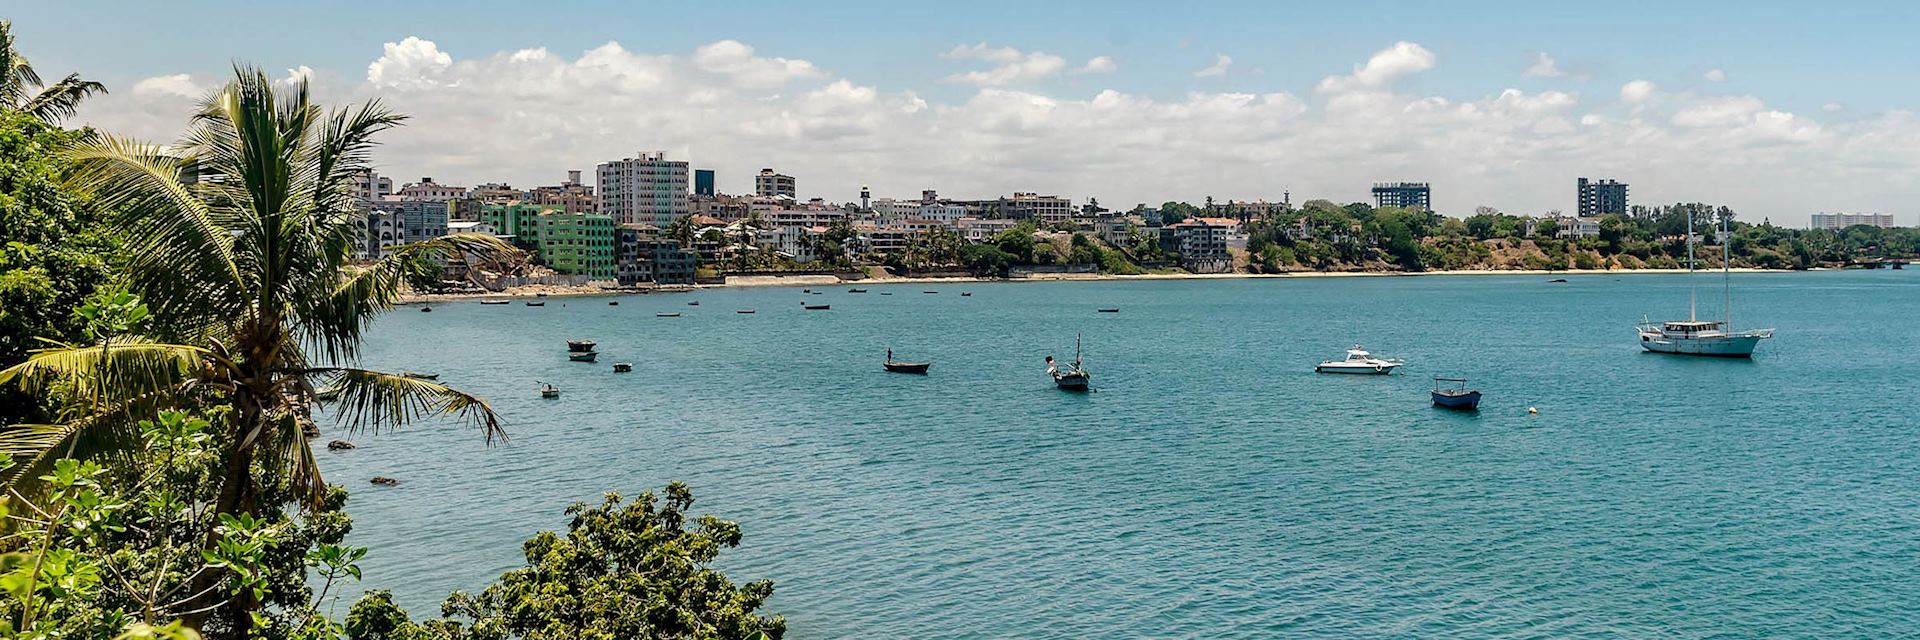 Mombasa waterfront, Kenya